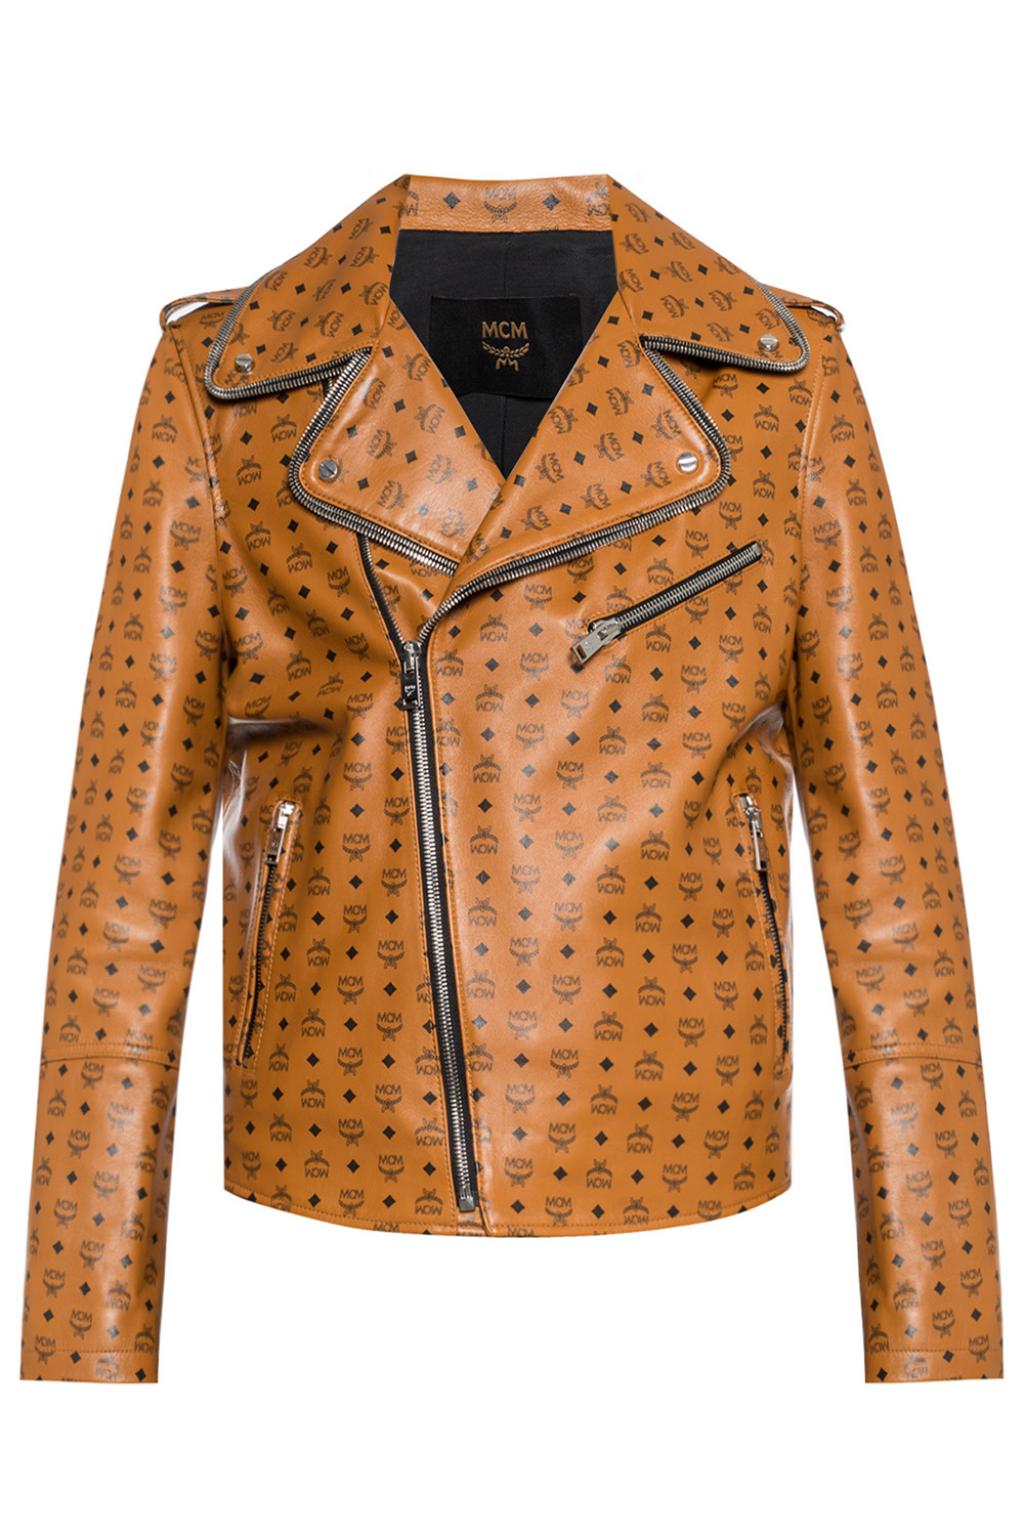 MCM jacket  Mcm jacket, Jackets, Clothes design